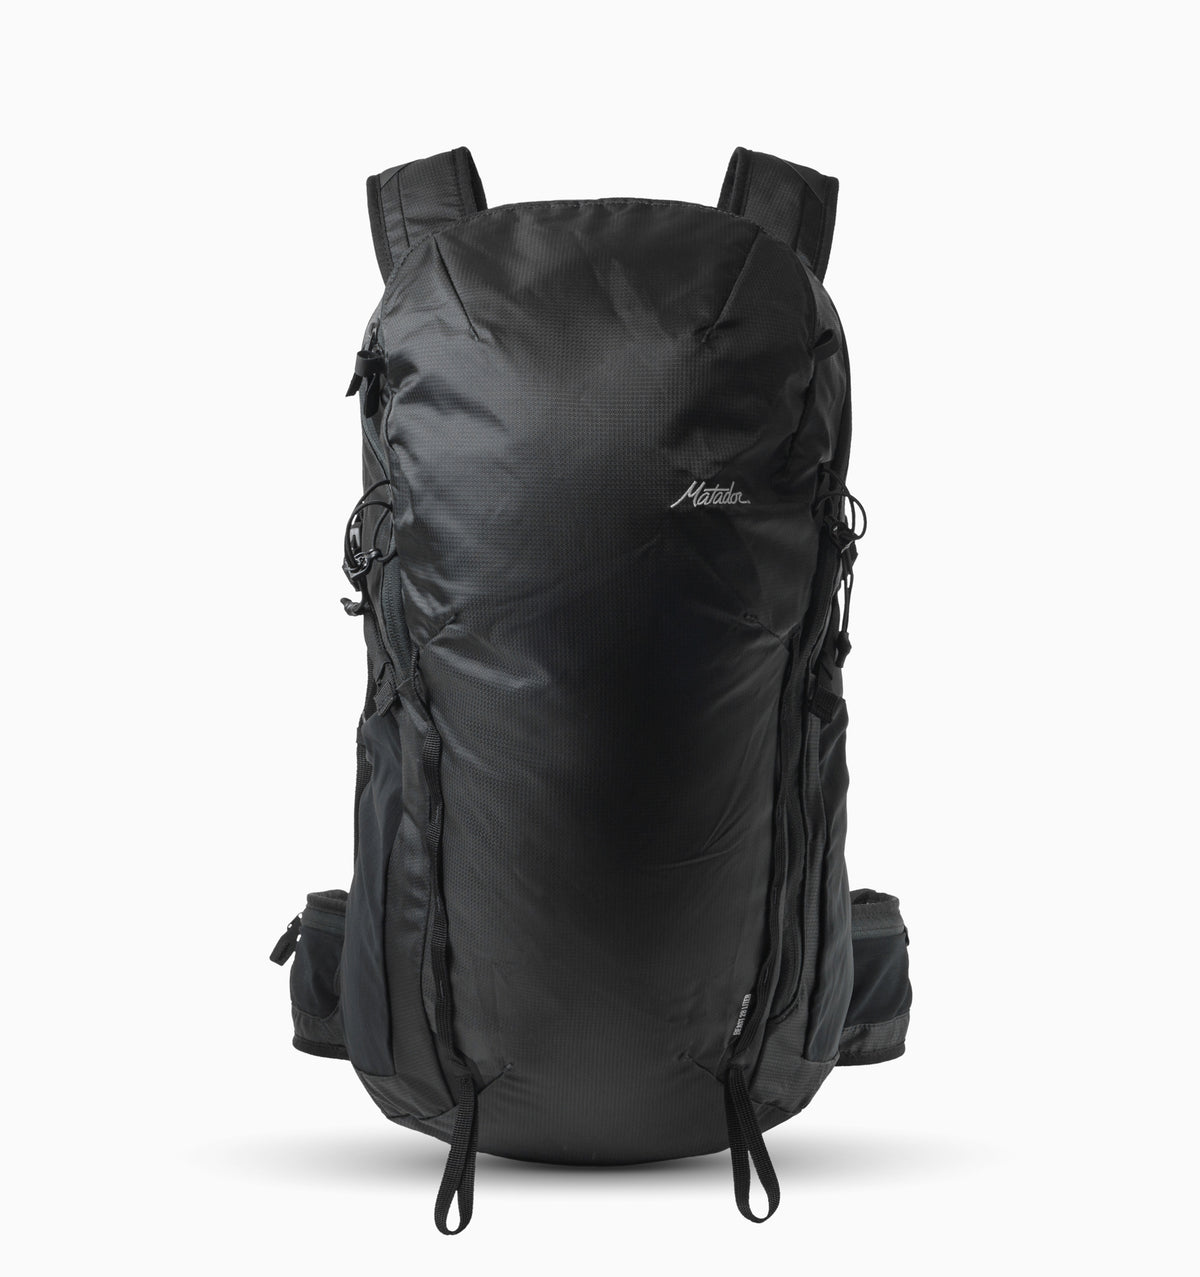 Matador Beast28 Ultralight Technical Backpack 28L - Black